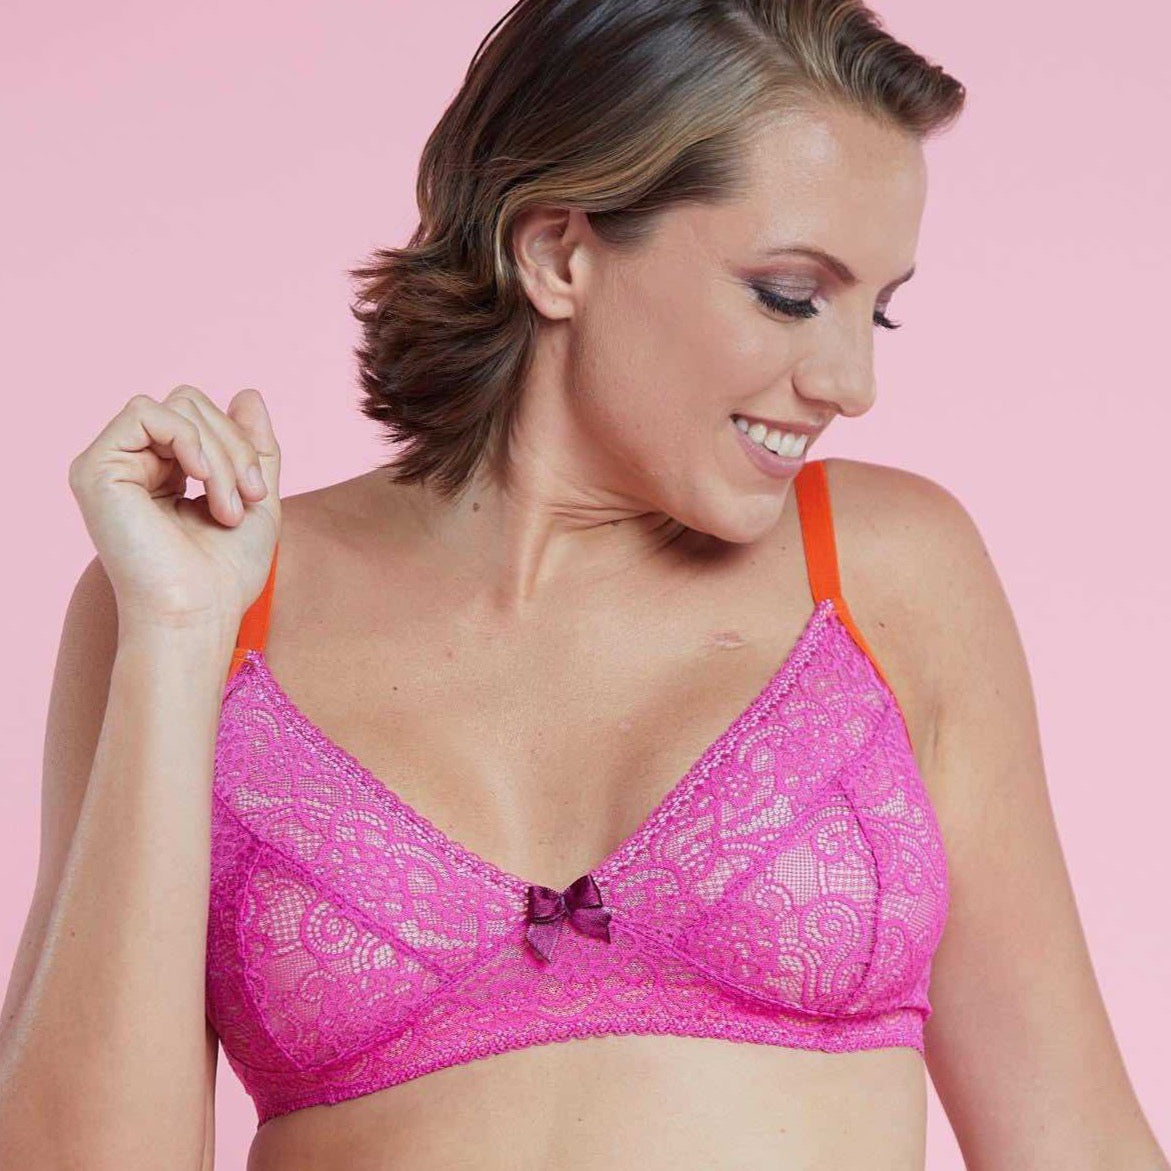 Bras Lingerie Women Bra Pink Lace Sexy Hot Underwear - Milanoo.com